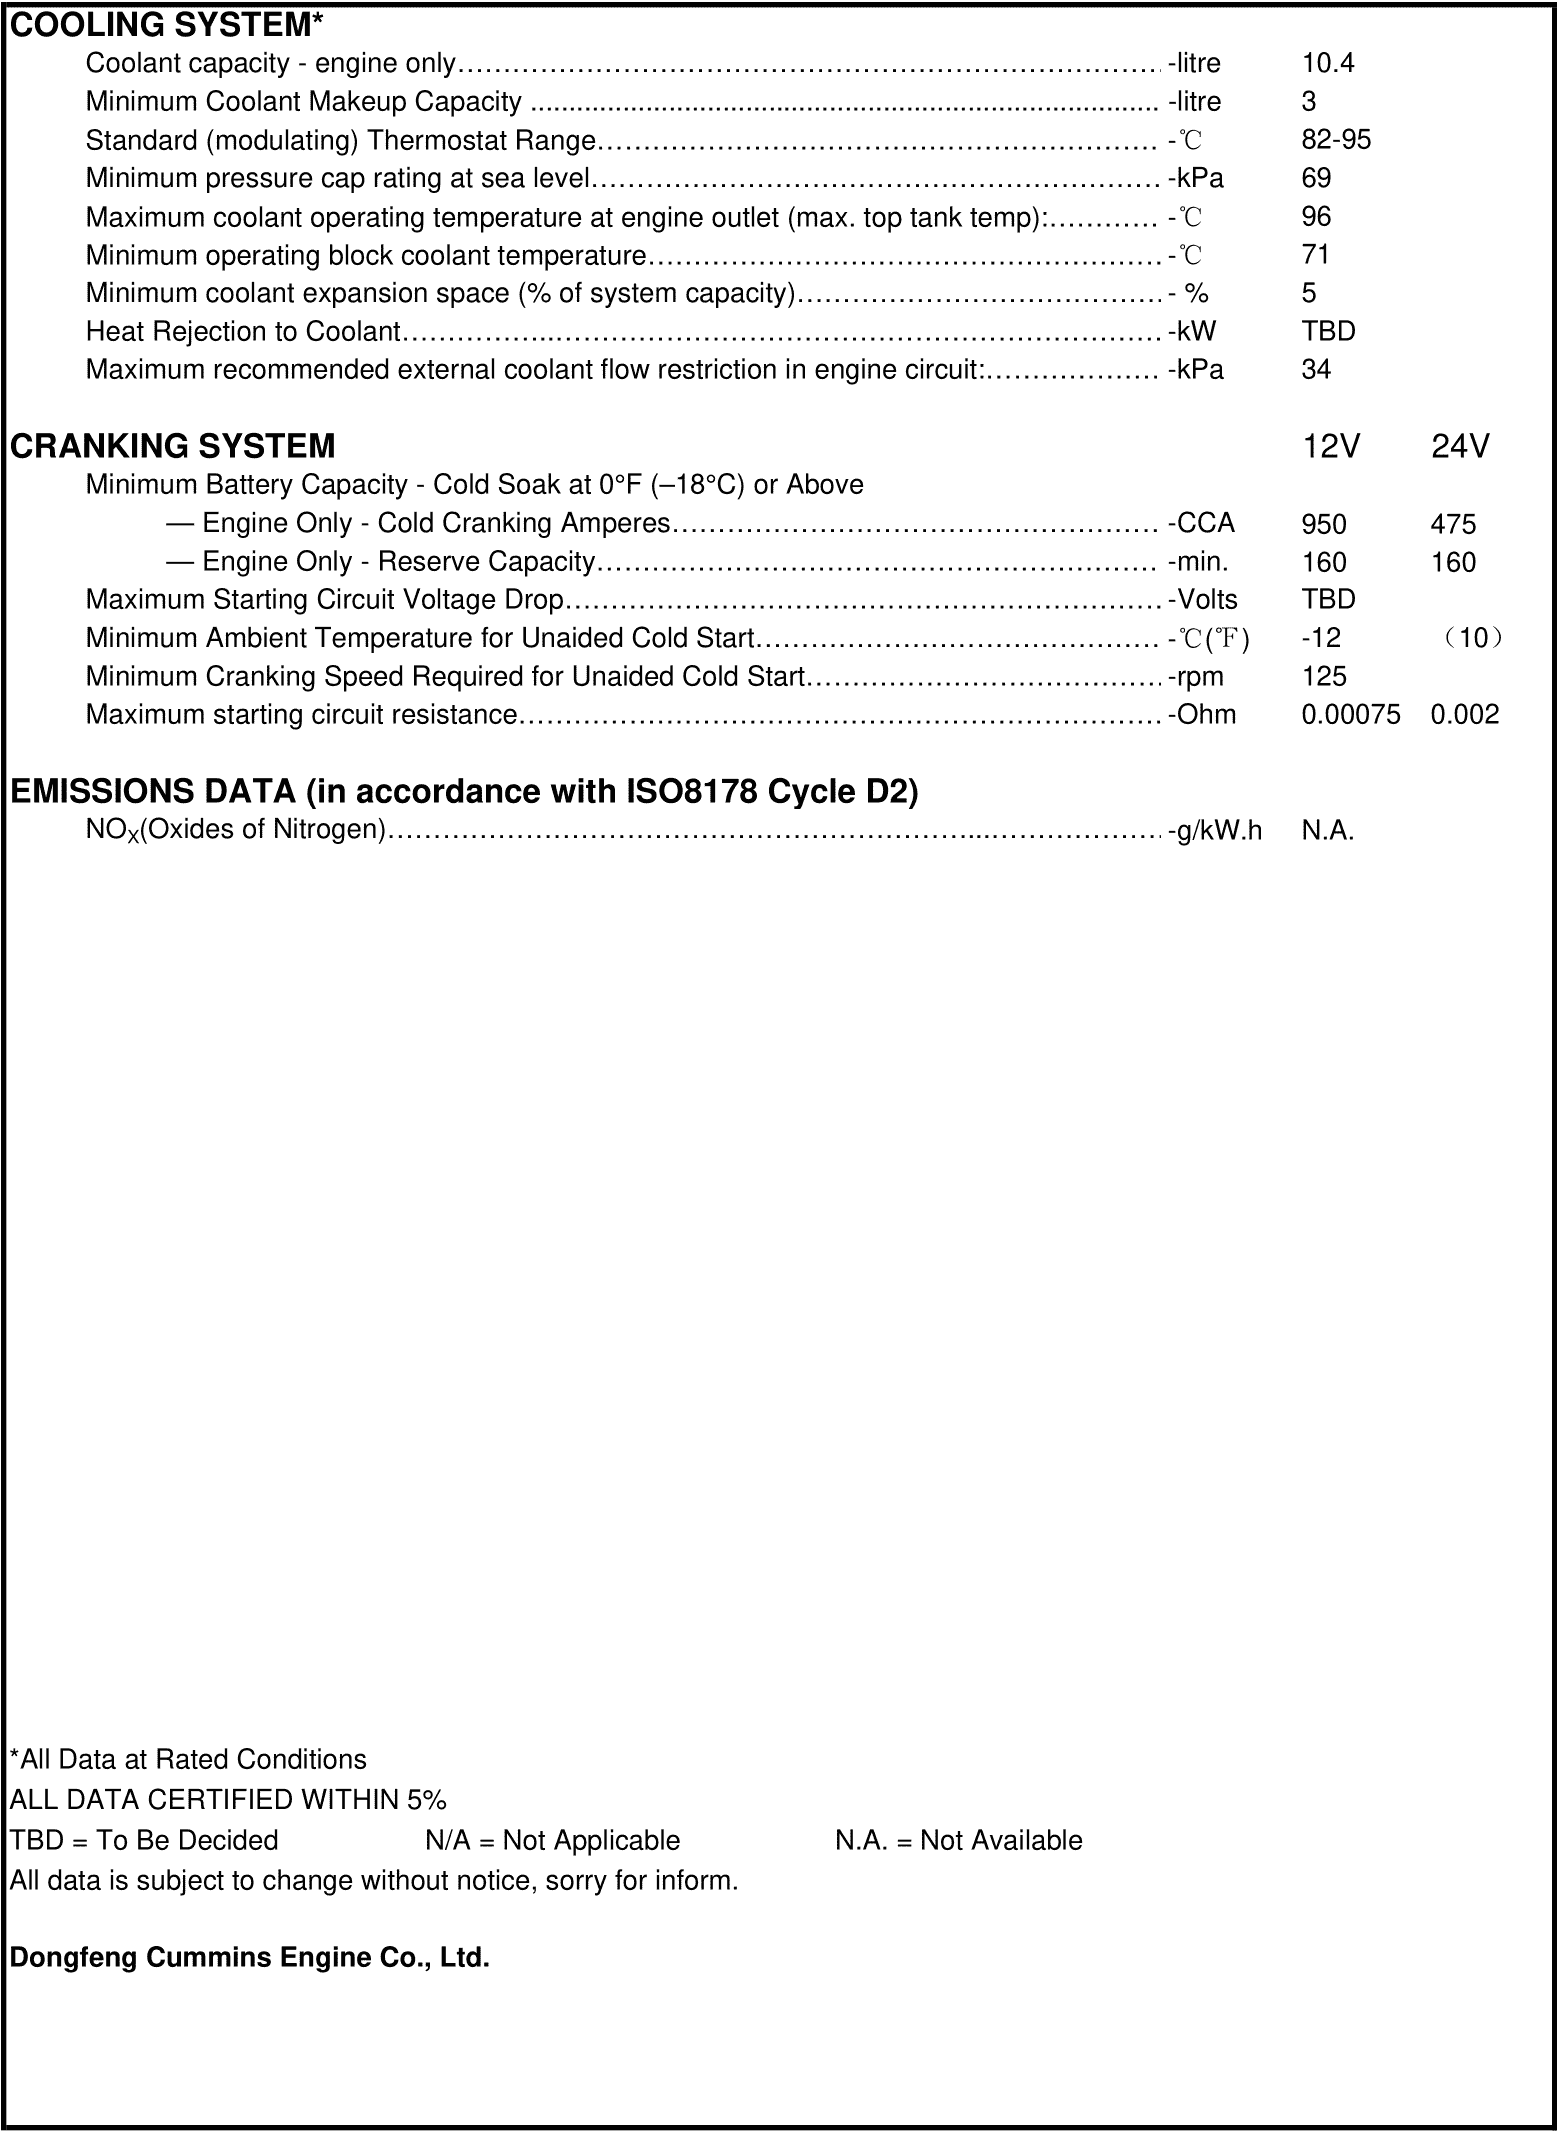 Cummins 6BTA5.9-GM120 datasheet